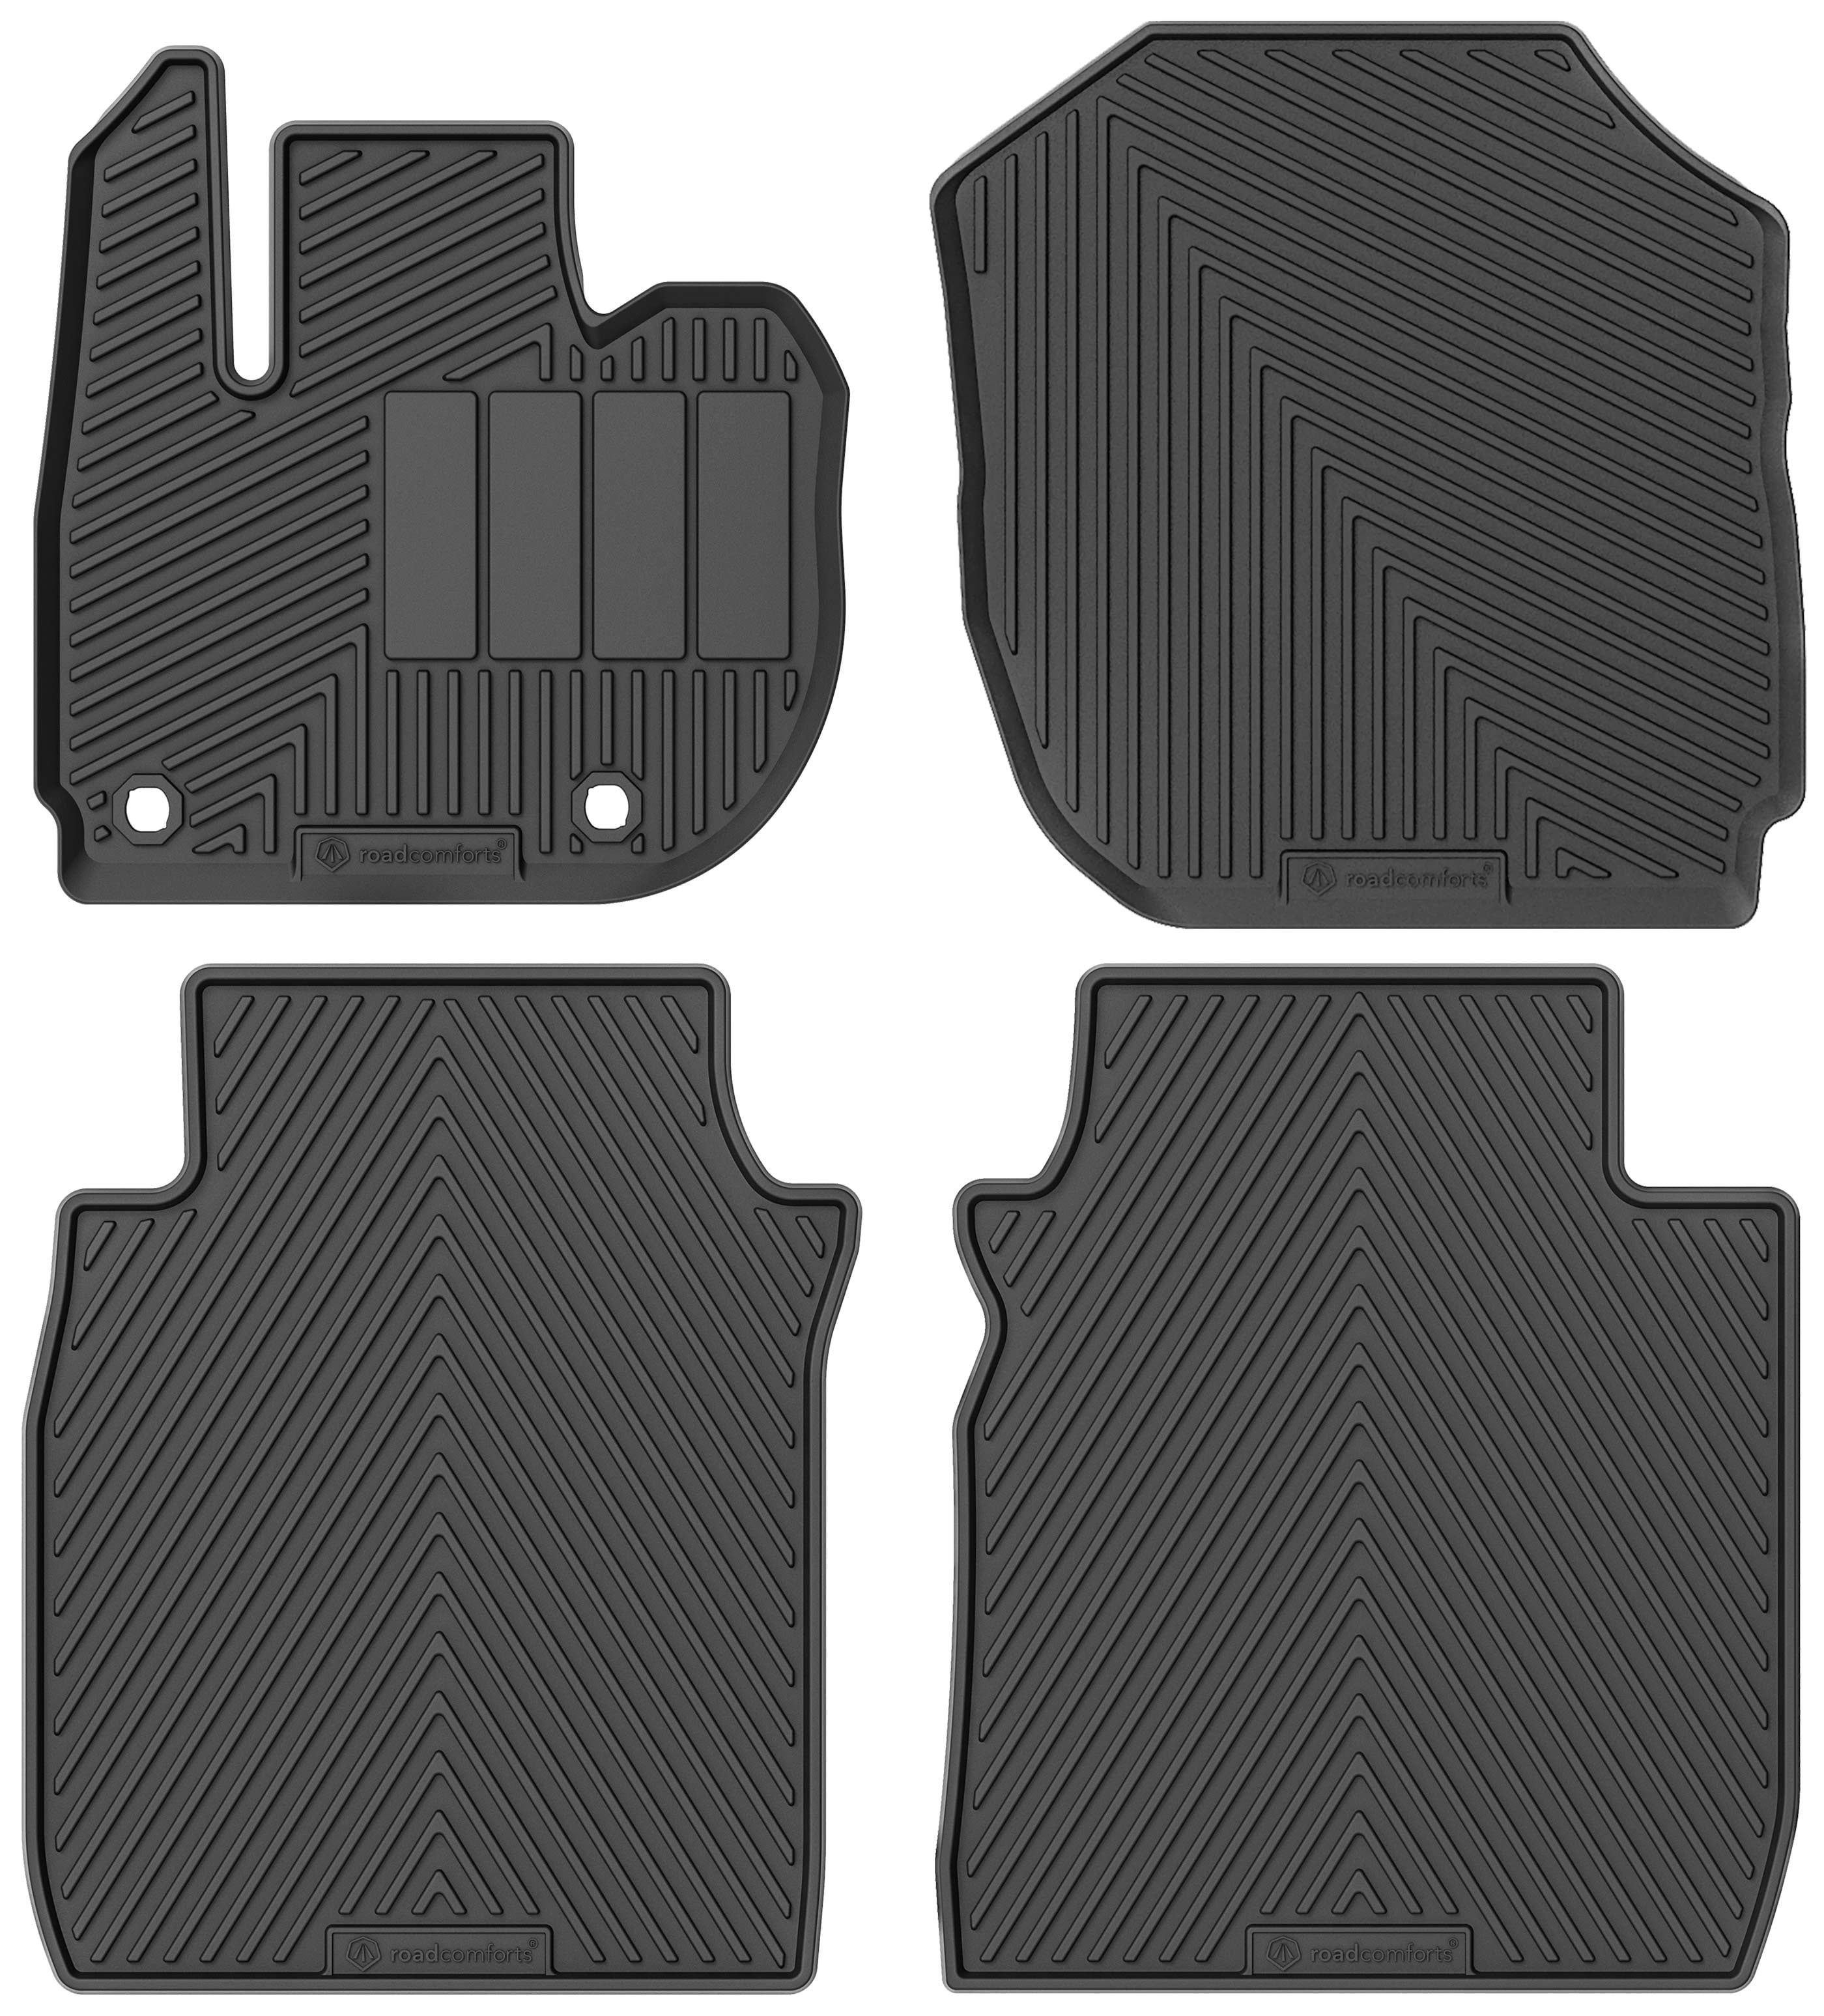 Plasticolor Ford Elite Series Universal Fit Black Vinyl Utility Mat, MPN  001219, 1pc